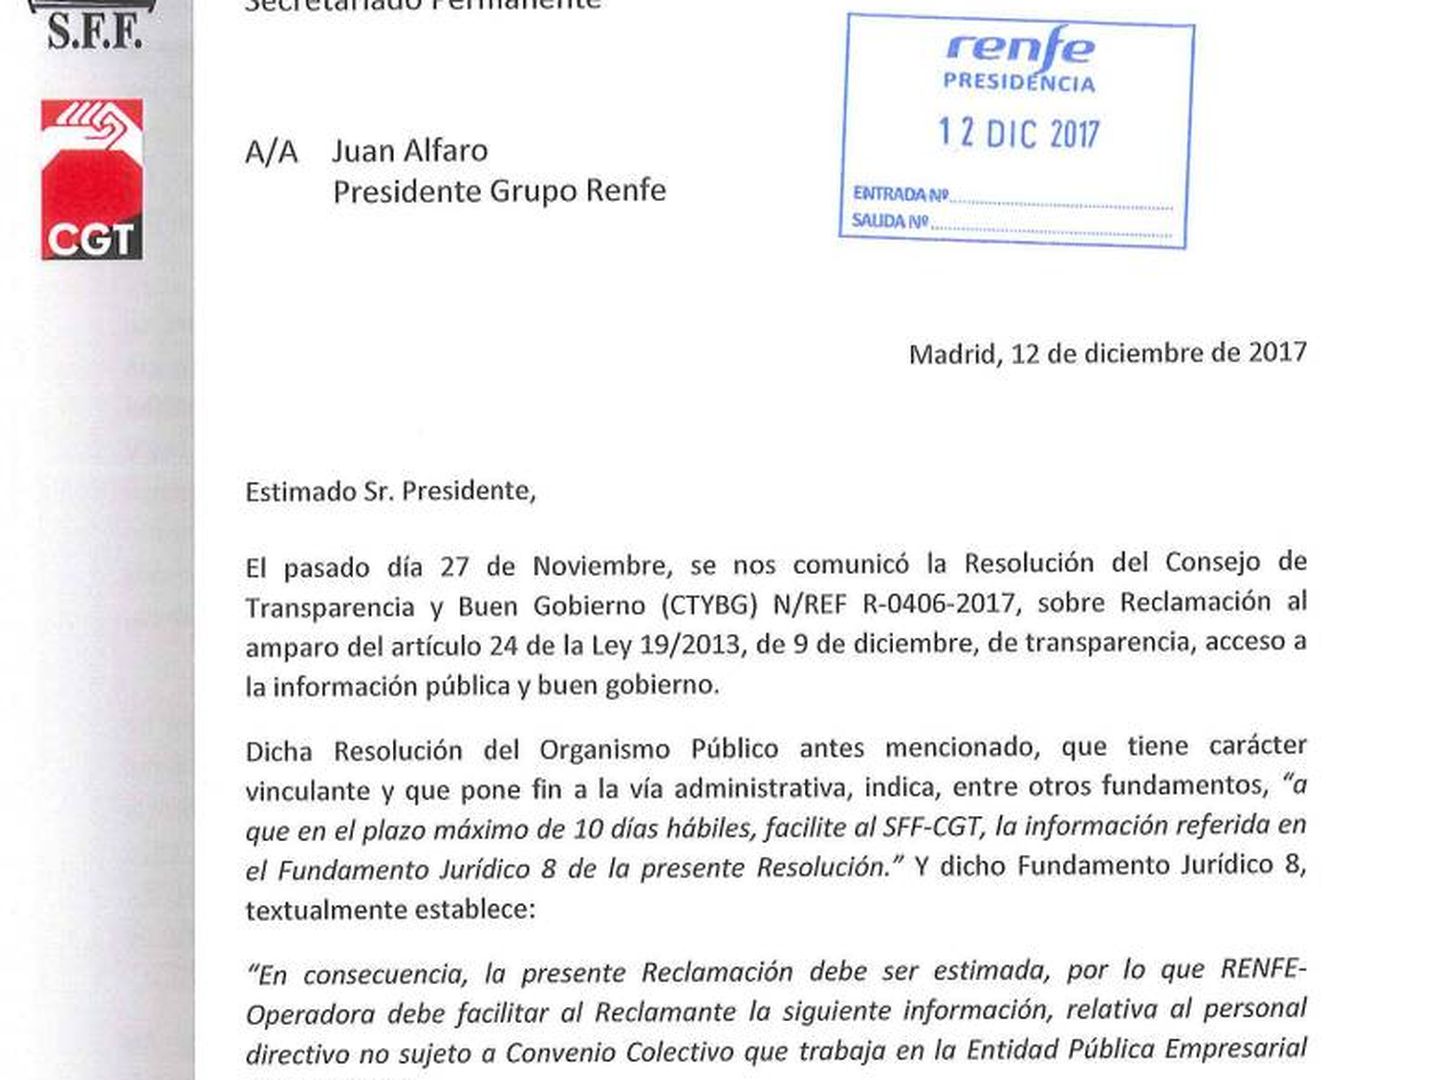 Carta remitida al presidente de Renfe-Operadora, Juan Alfaro.